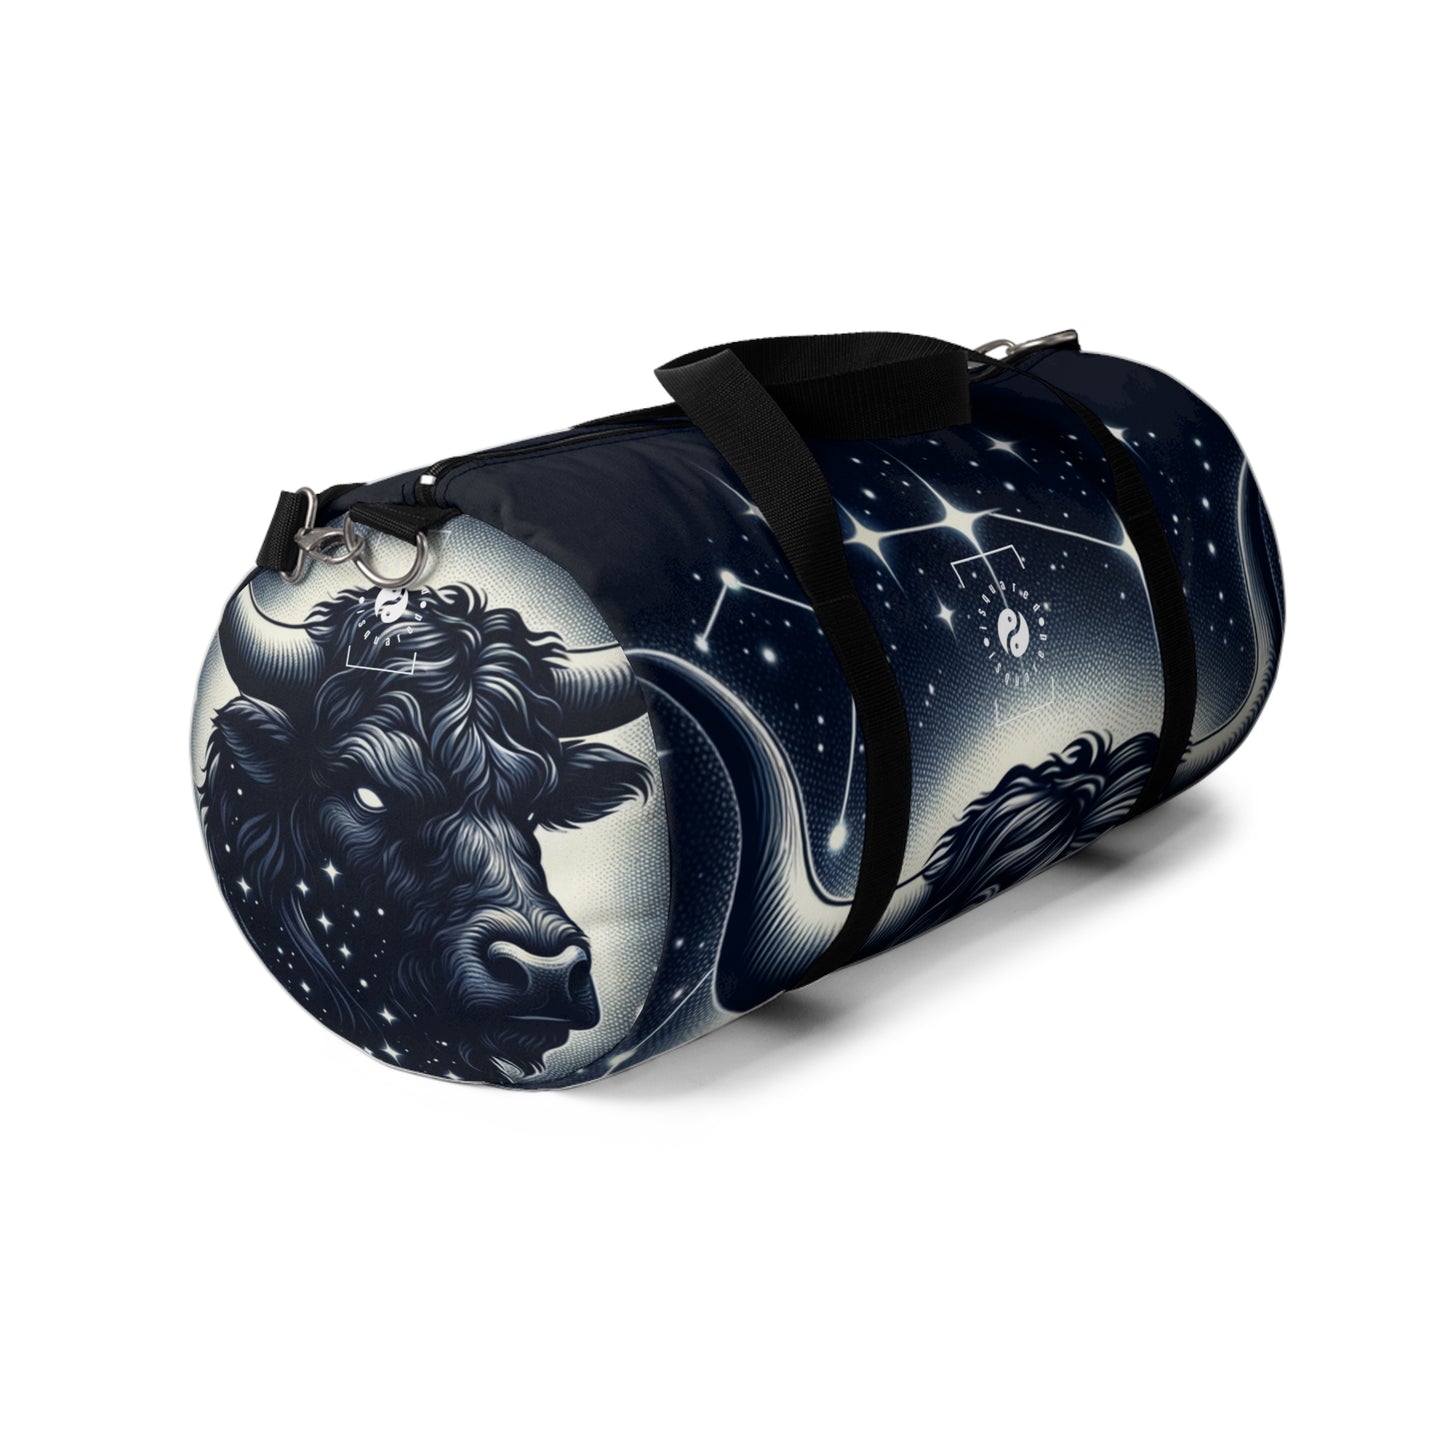 Celestial Taurine Constellation - Duffle Bag